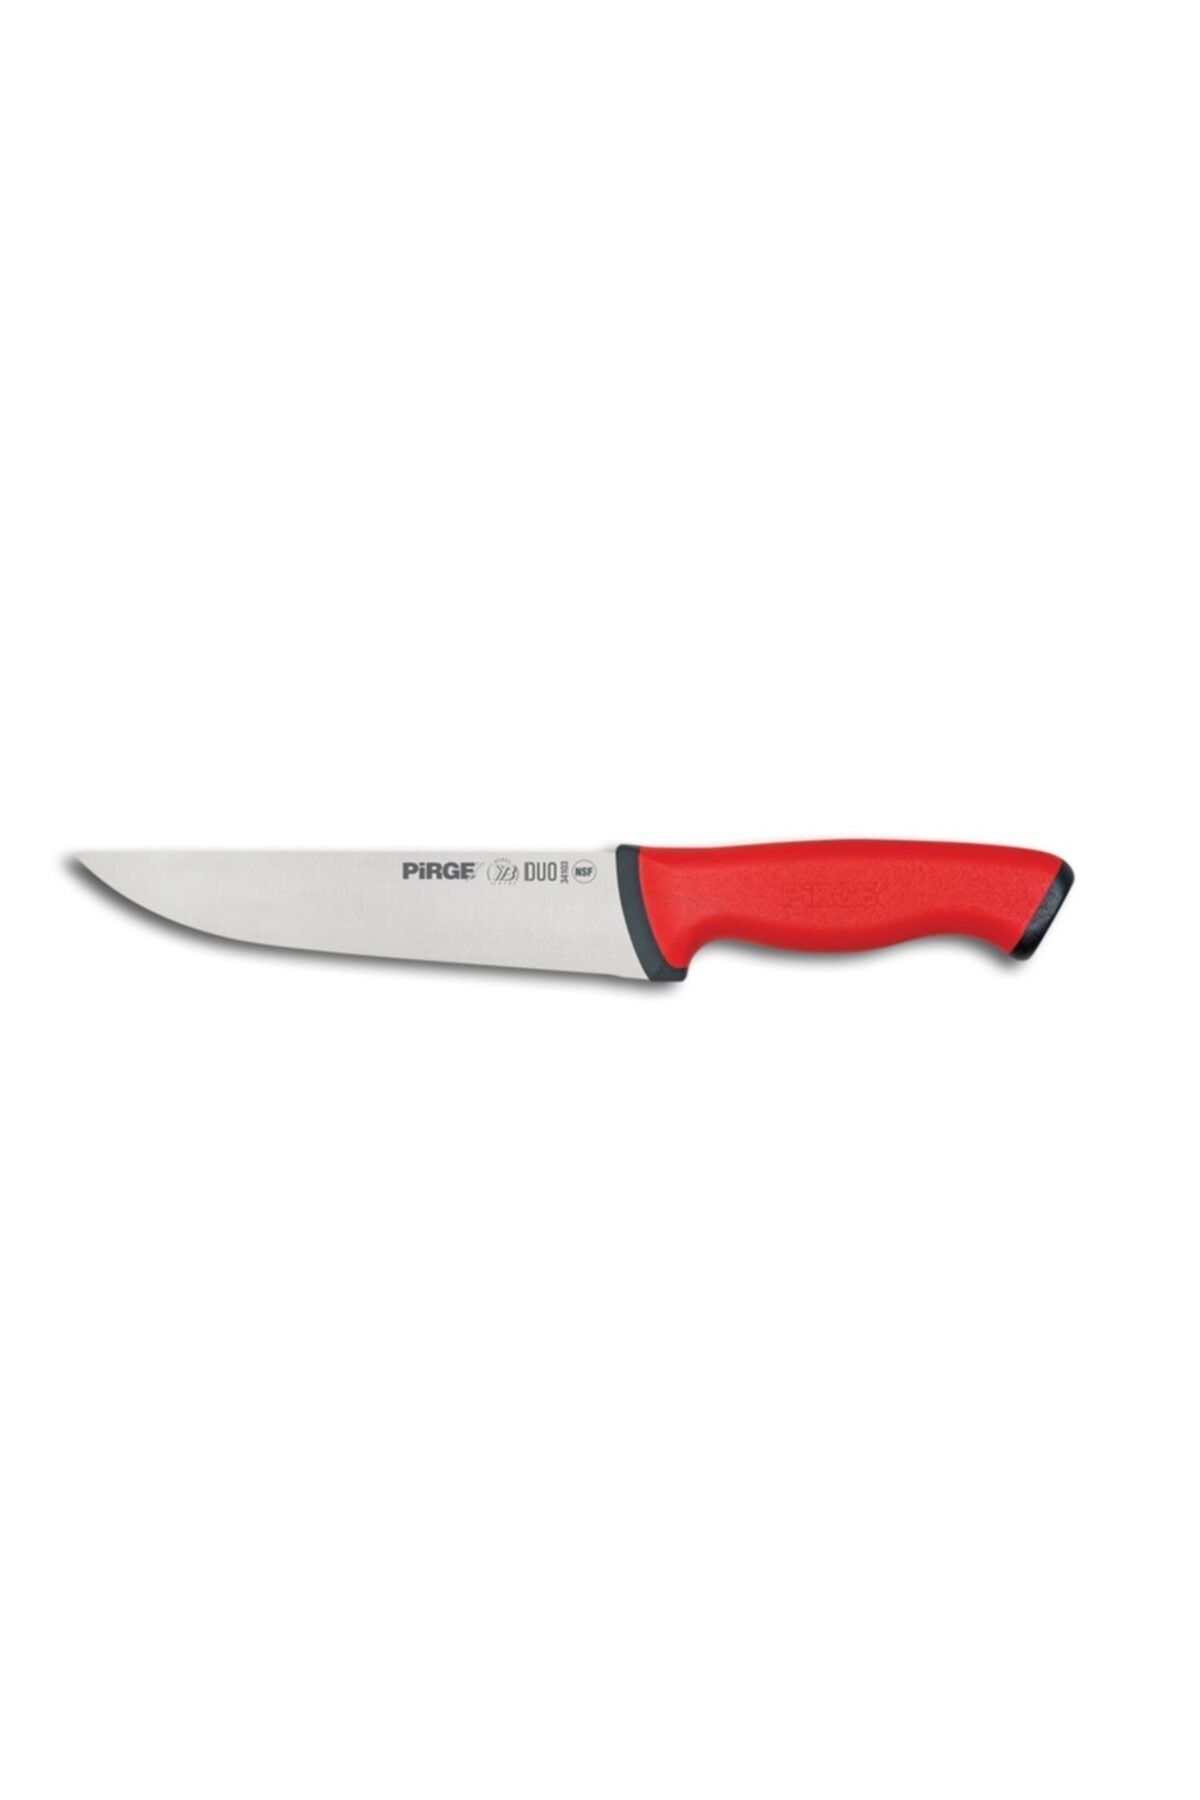 Pirge Duo Kasap Bıçağı No.3 19 Cm 34103